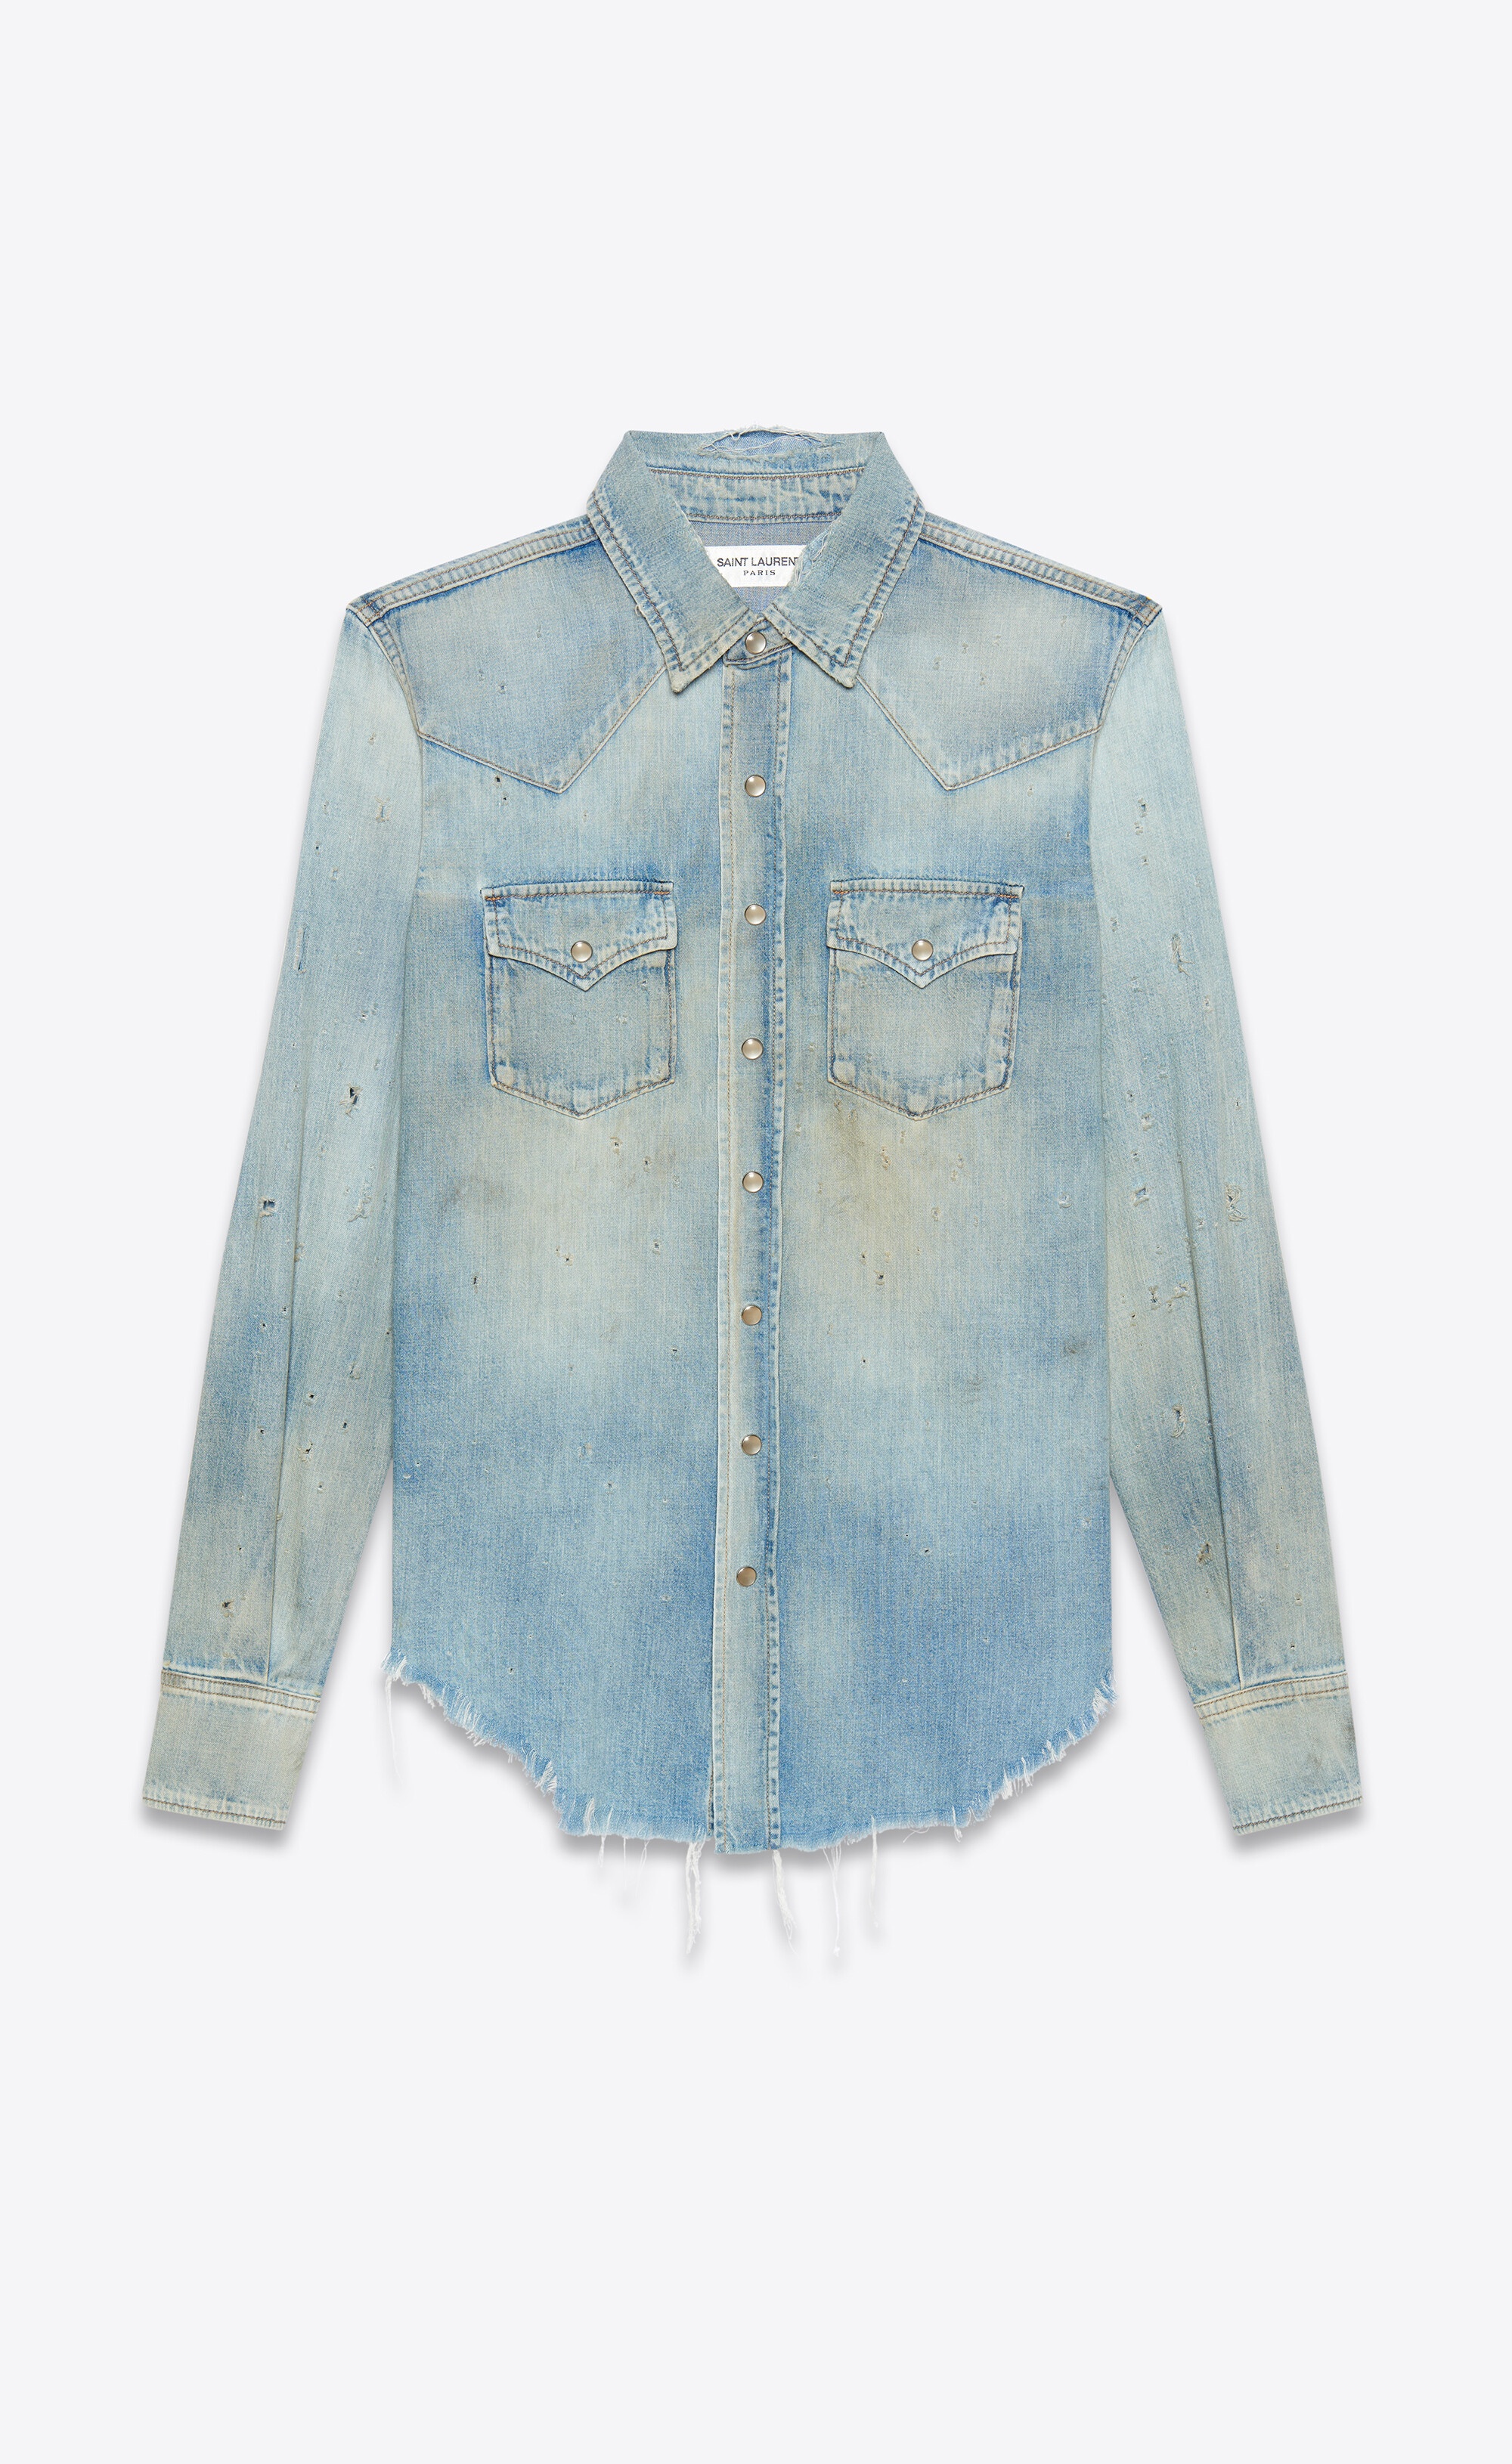 destroyed classic western shirt in dirty vintage blue denim - 1